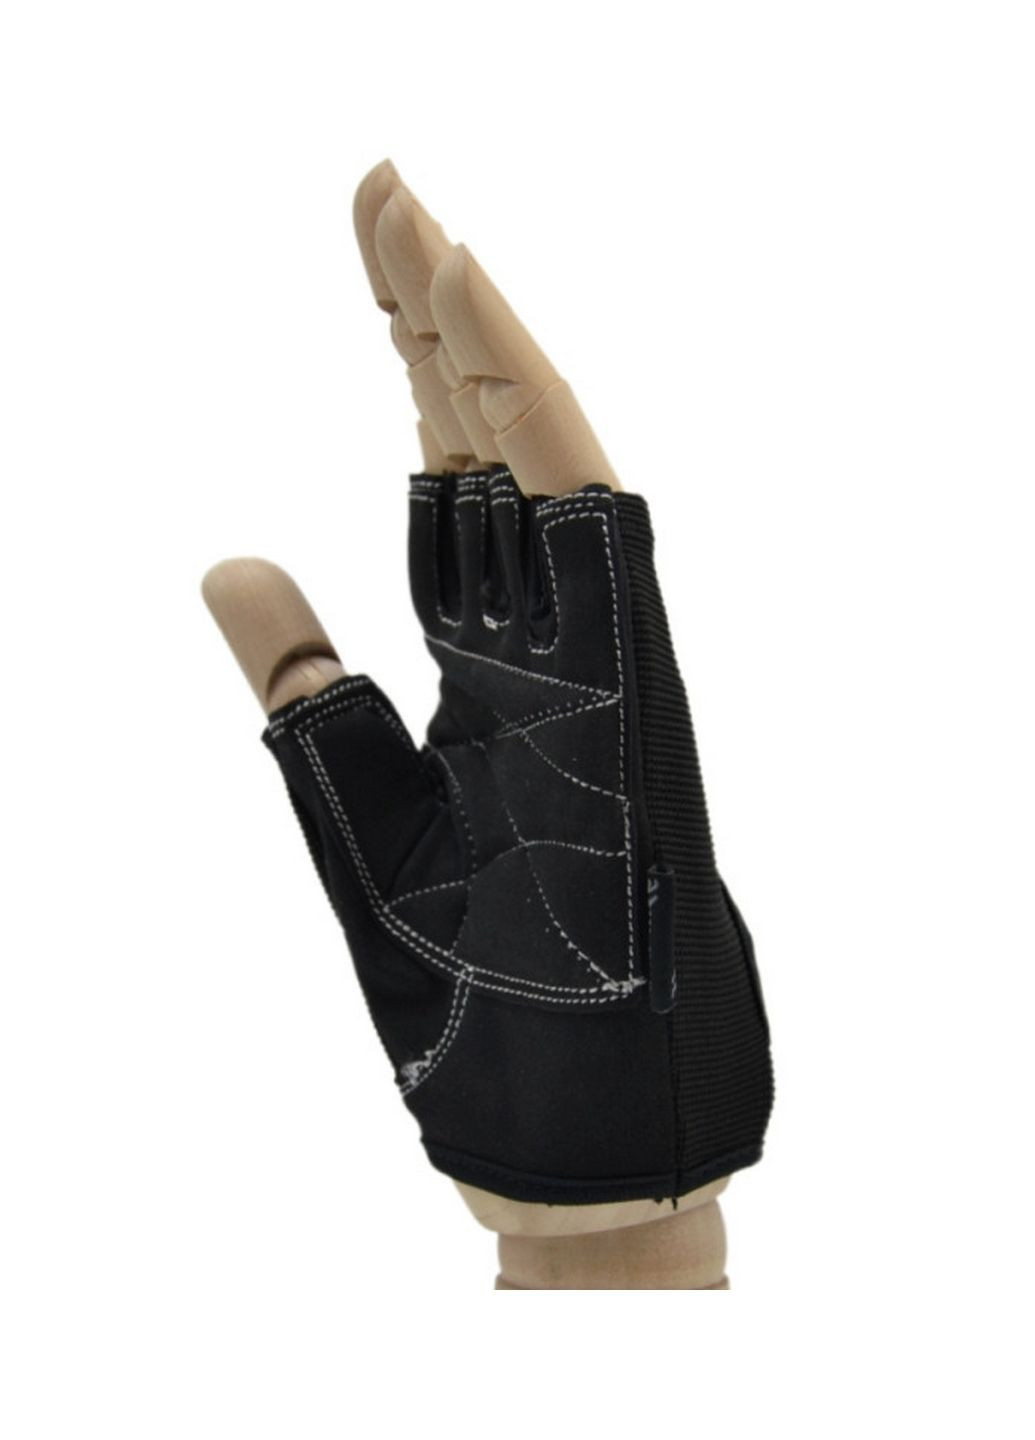 Перчатки для фитнеса Pro Grip Power System (292577206)